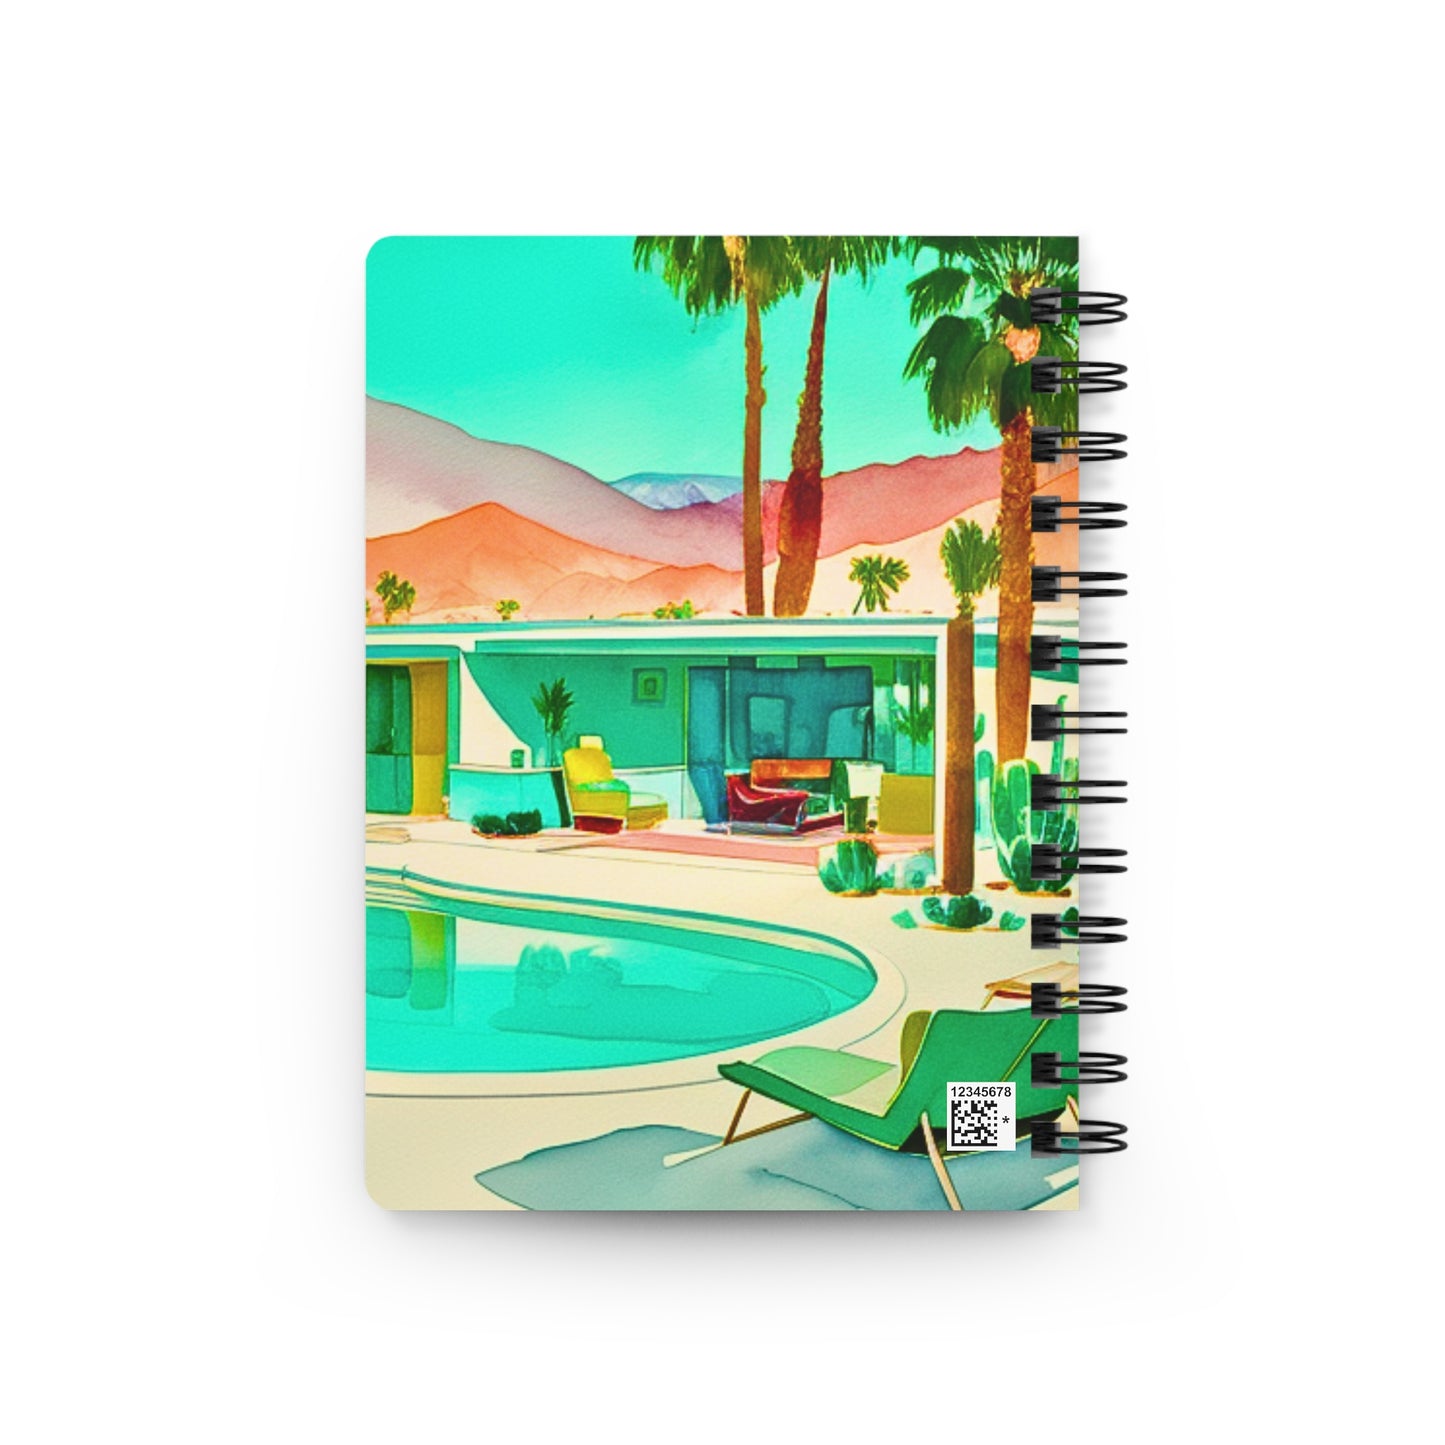 Weekend in the Palm Springs Desert Midcentury Modern Motel Travel Writing Sketch Inspiration Spiral Bound Journal